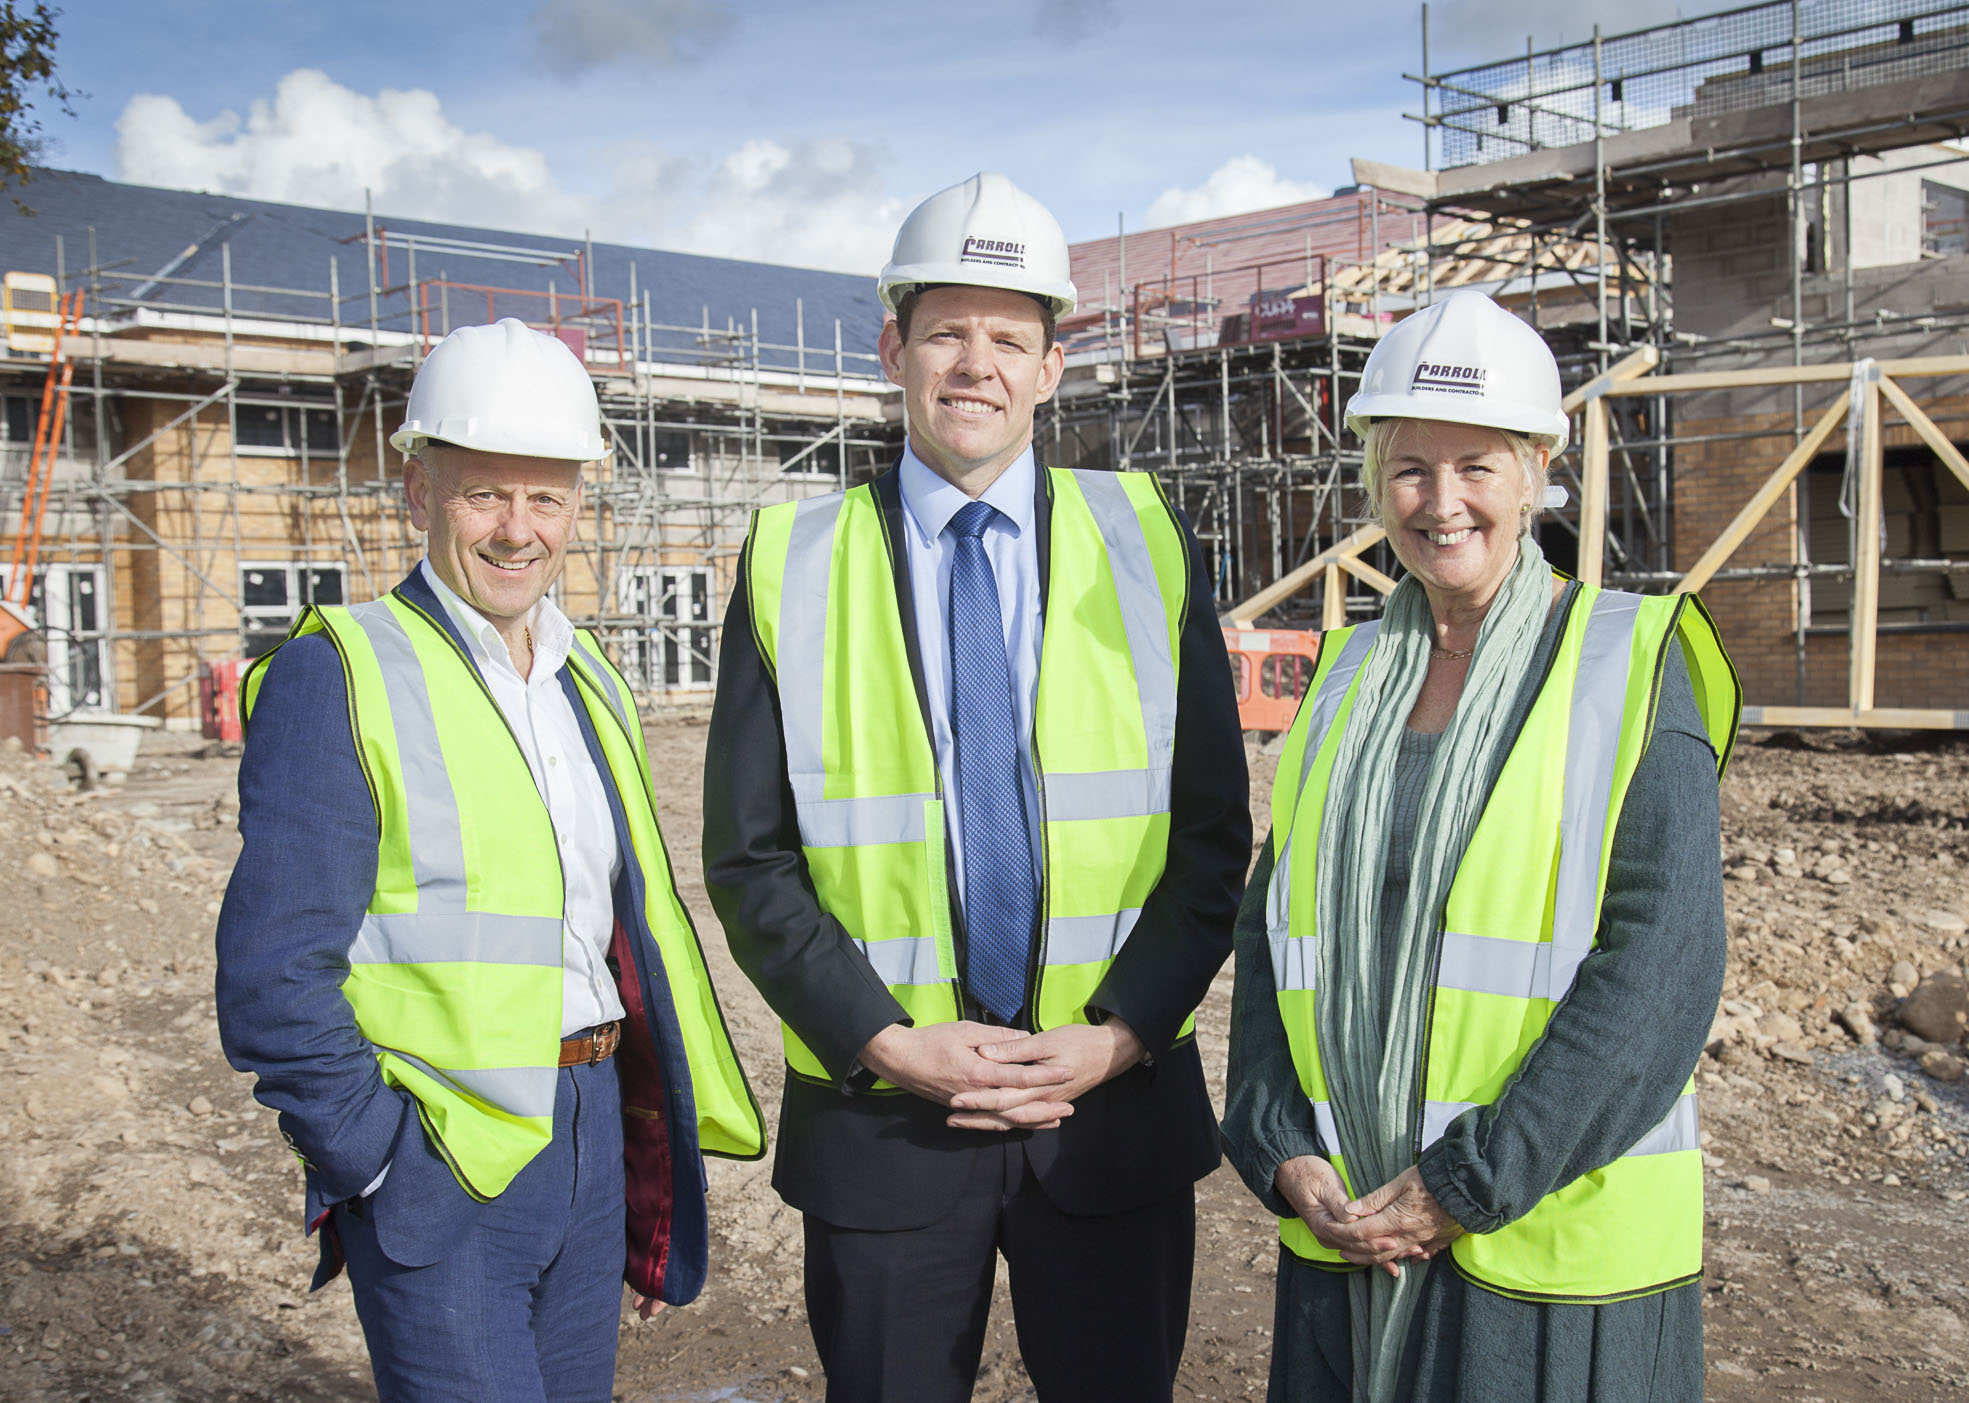 Pioneering £3m care complex will create 30 jobs in Gwynedd  